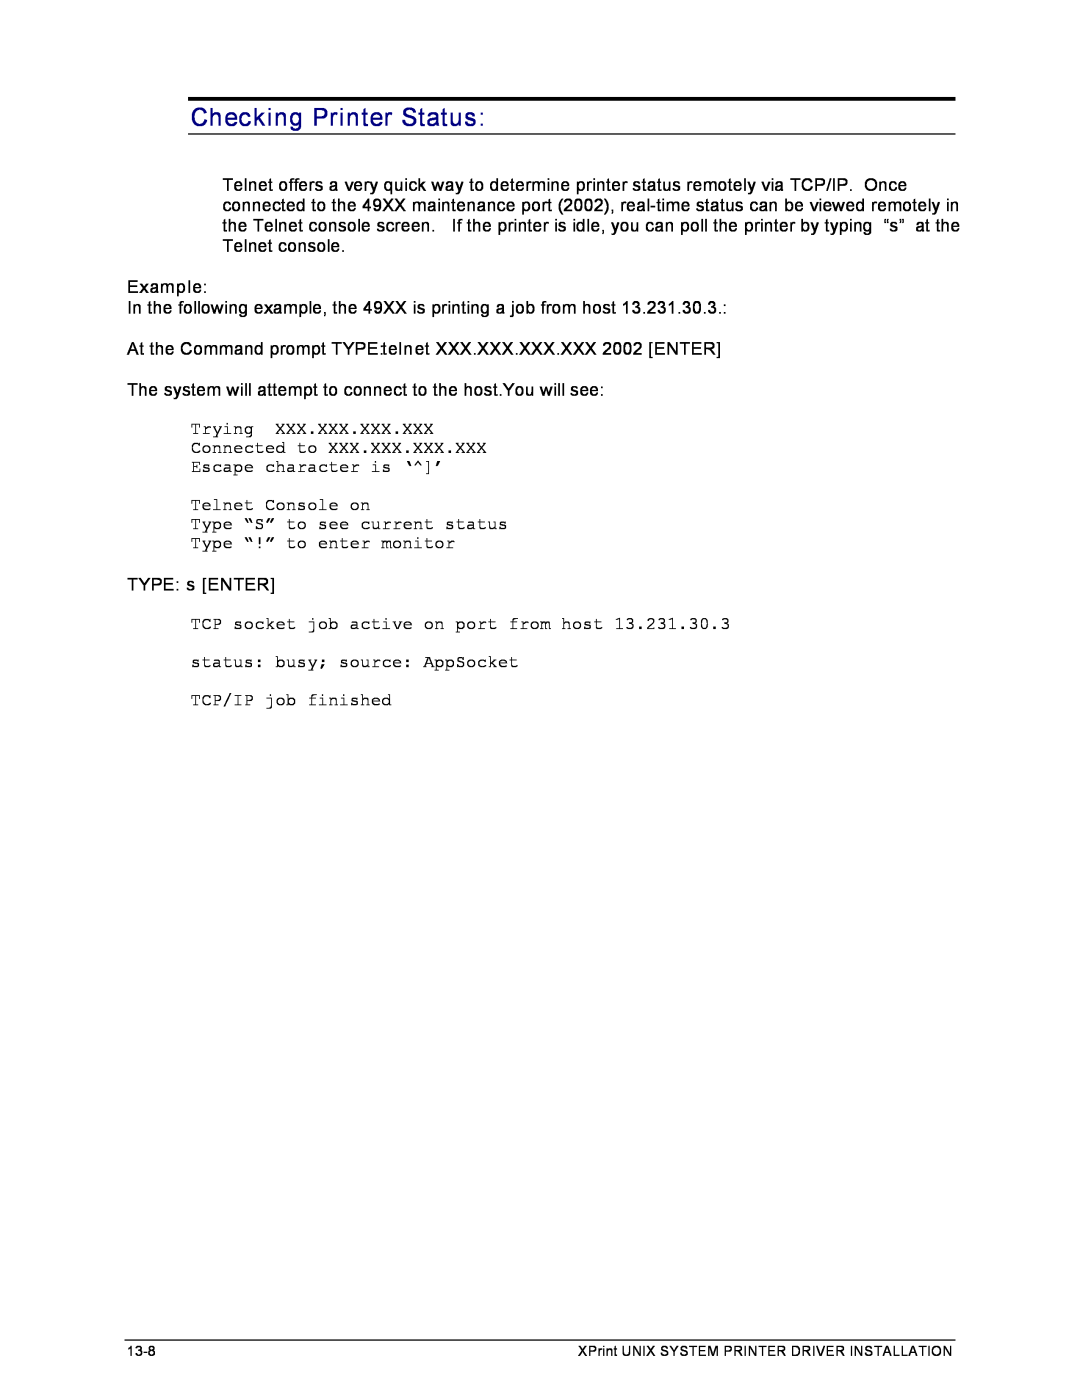 Xerox 701P91273 manual Checking Printer Status, Example, TYPE: s ENTER 